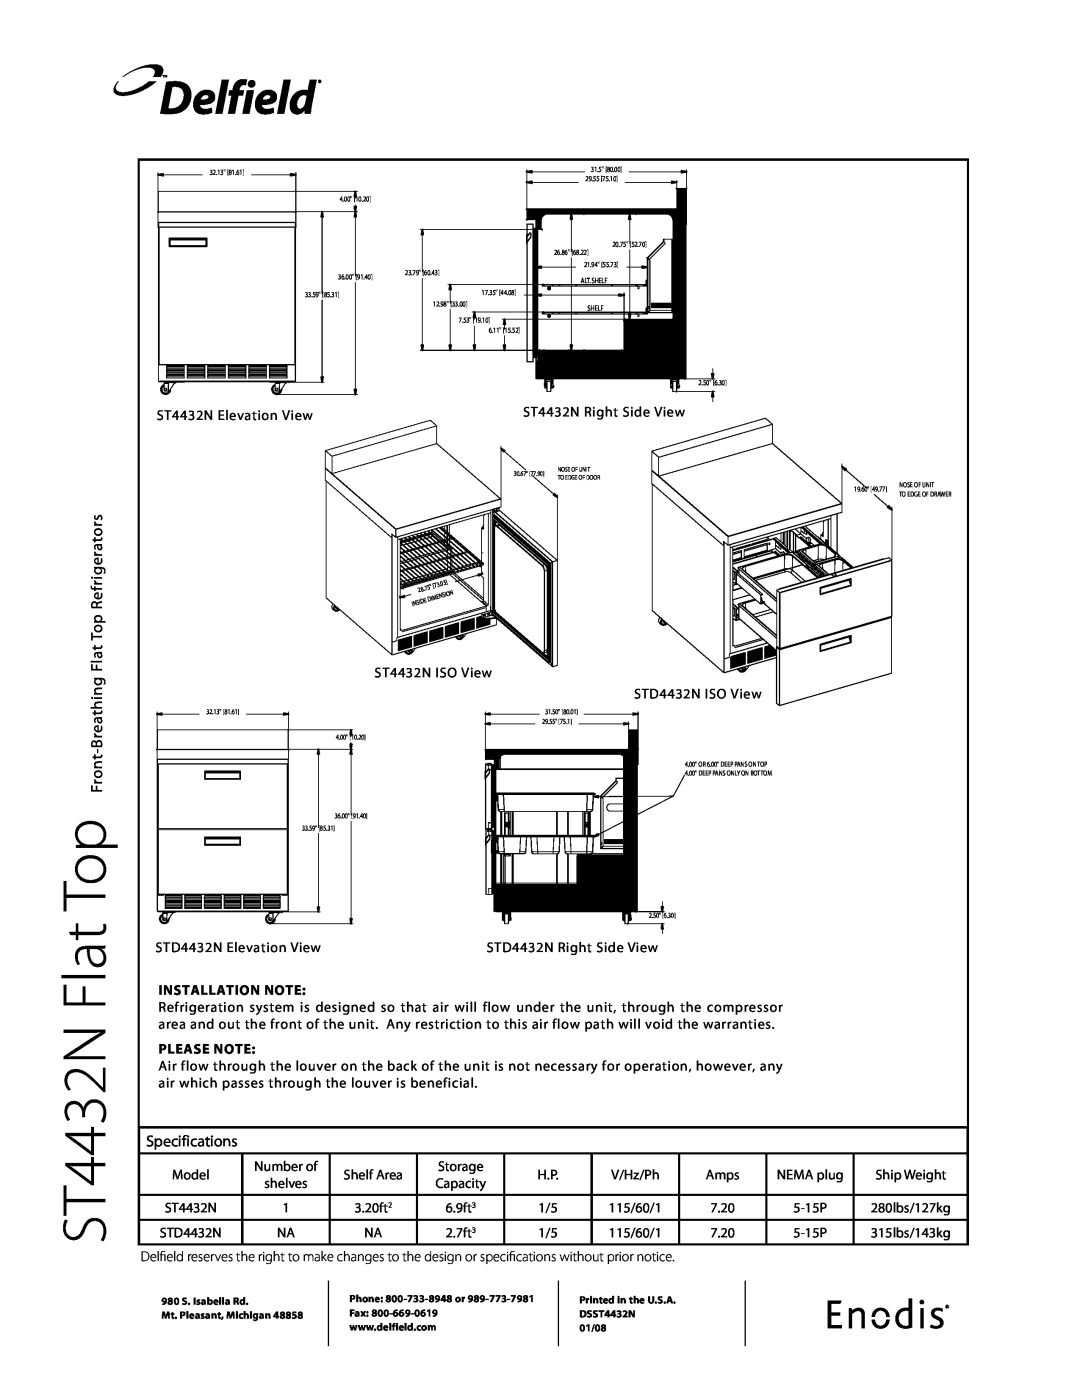 Delfield specifications Flat Top Refrigerators, Specifications, ST4432N Flat, Delfield, Installation Note, Please Note 